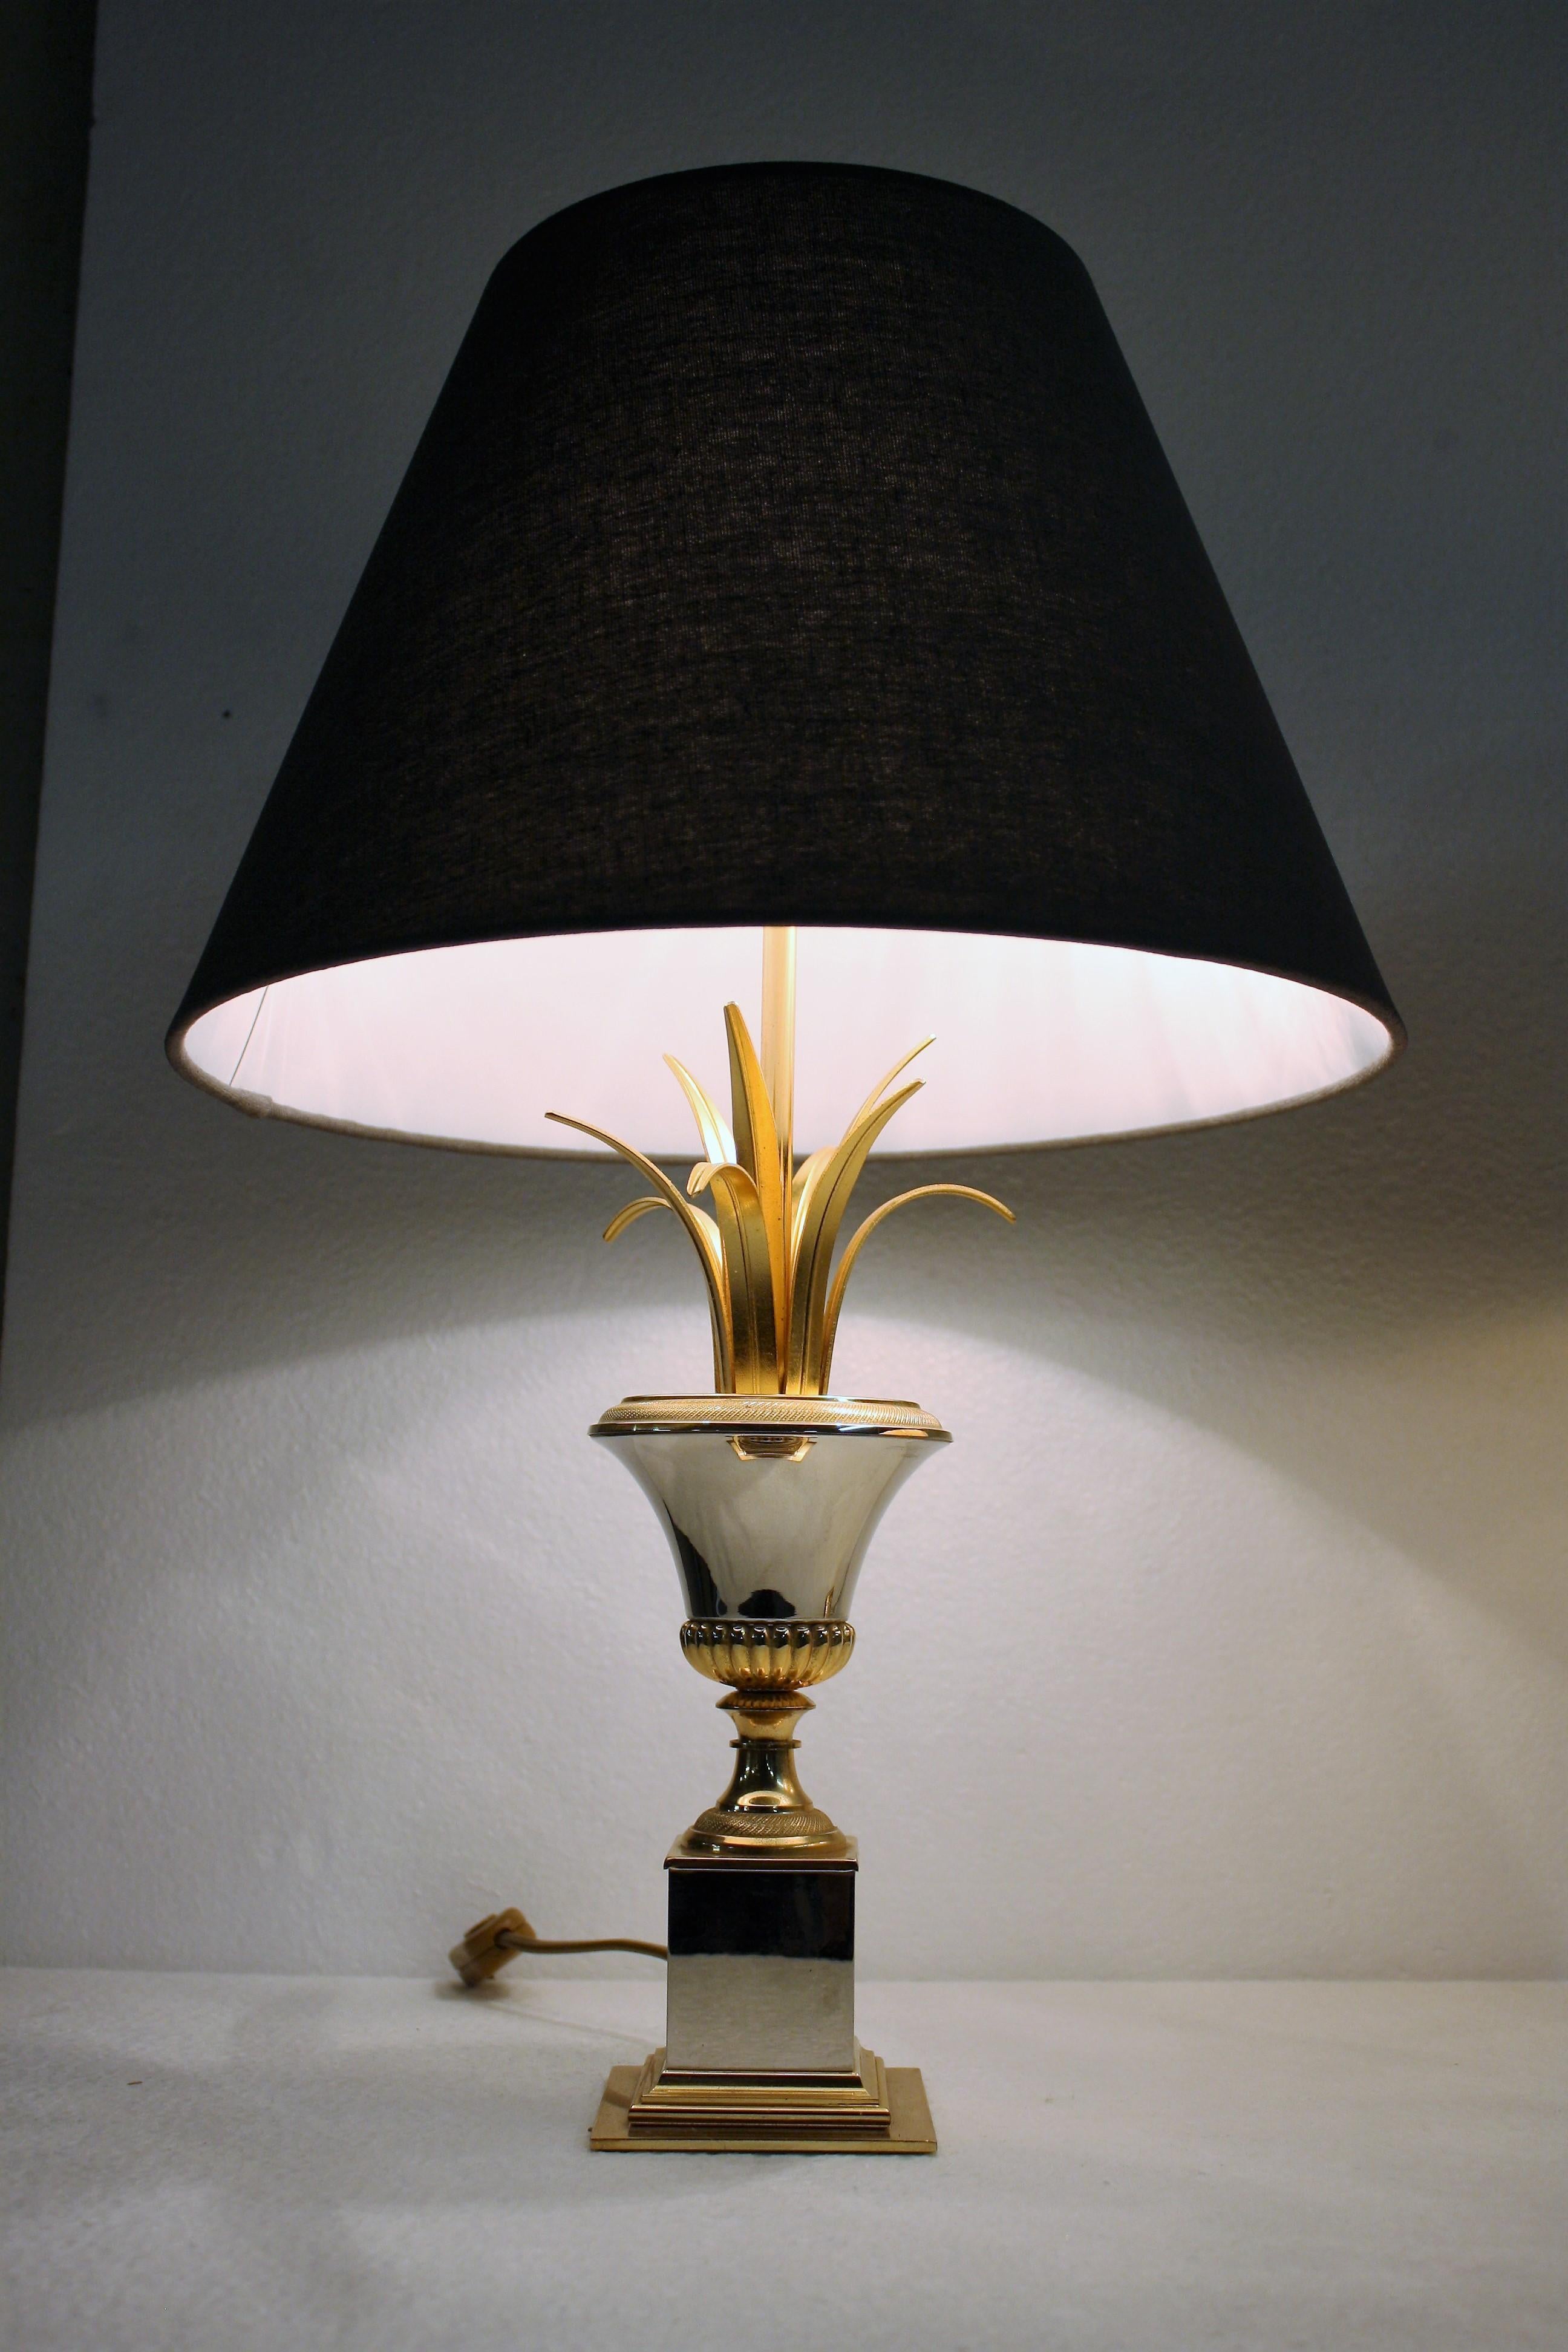 Vintage Pineapple Leaf Table Lamp Made of Brass, 1970s (Hollywood Regency)